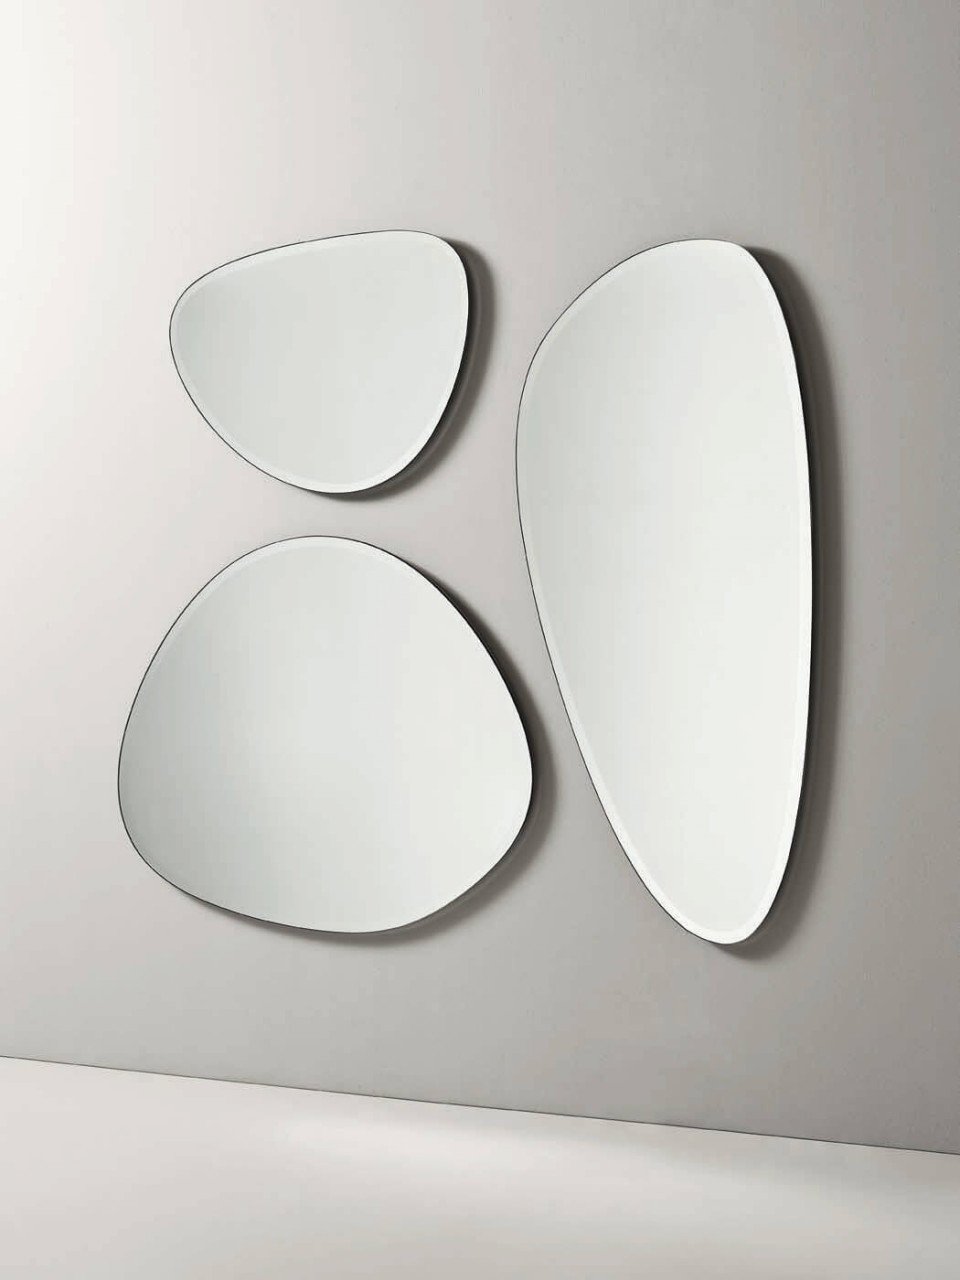 Spot Mirror from Midj, designed by Nicola Bonriposi